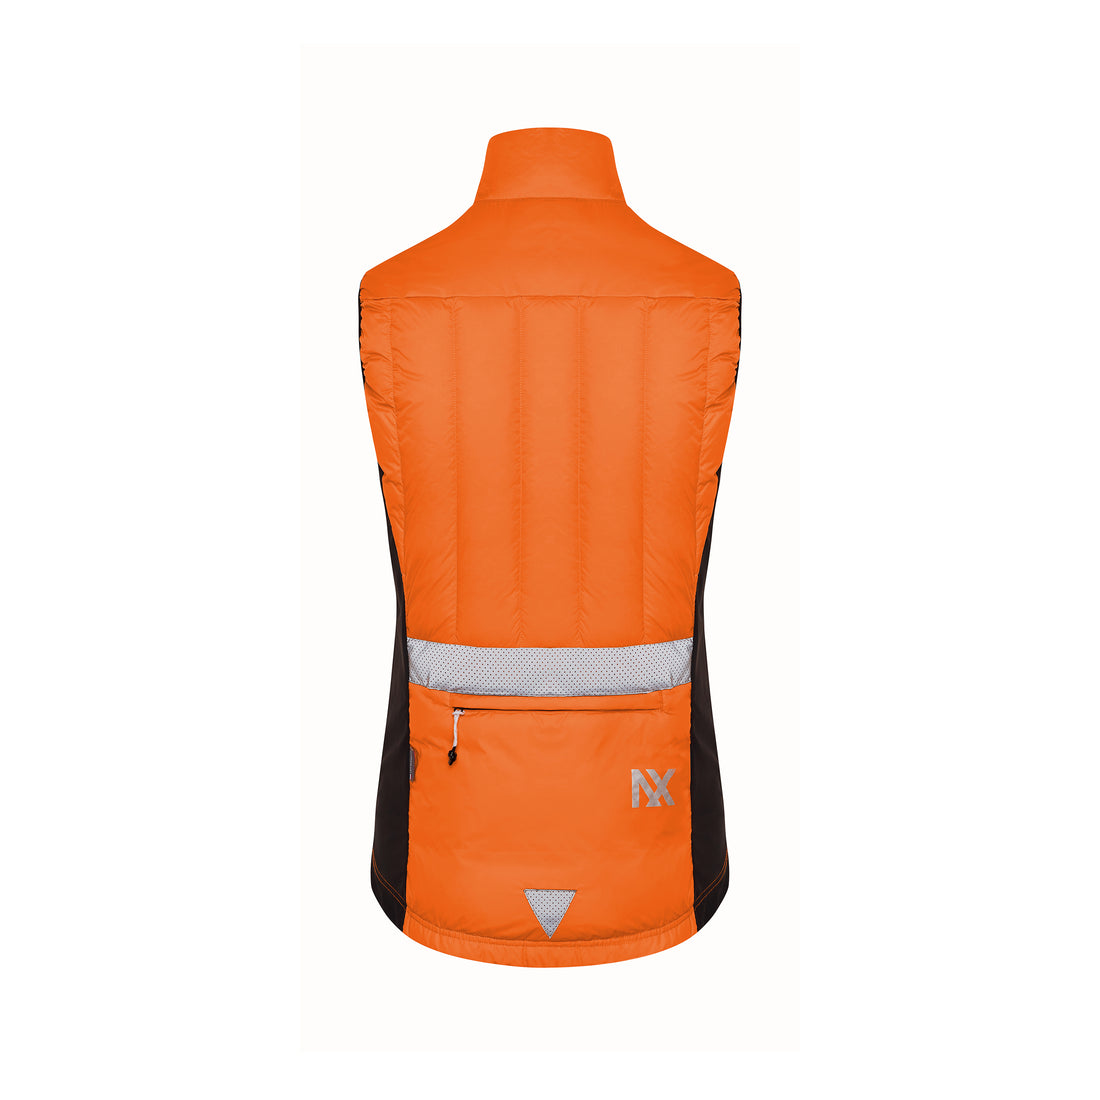 Café du Cycliste Maya Unisex Insulated Packable Cycling Gilet Winter Fahrradweste Neon Orange